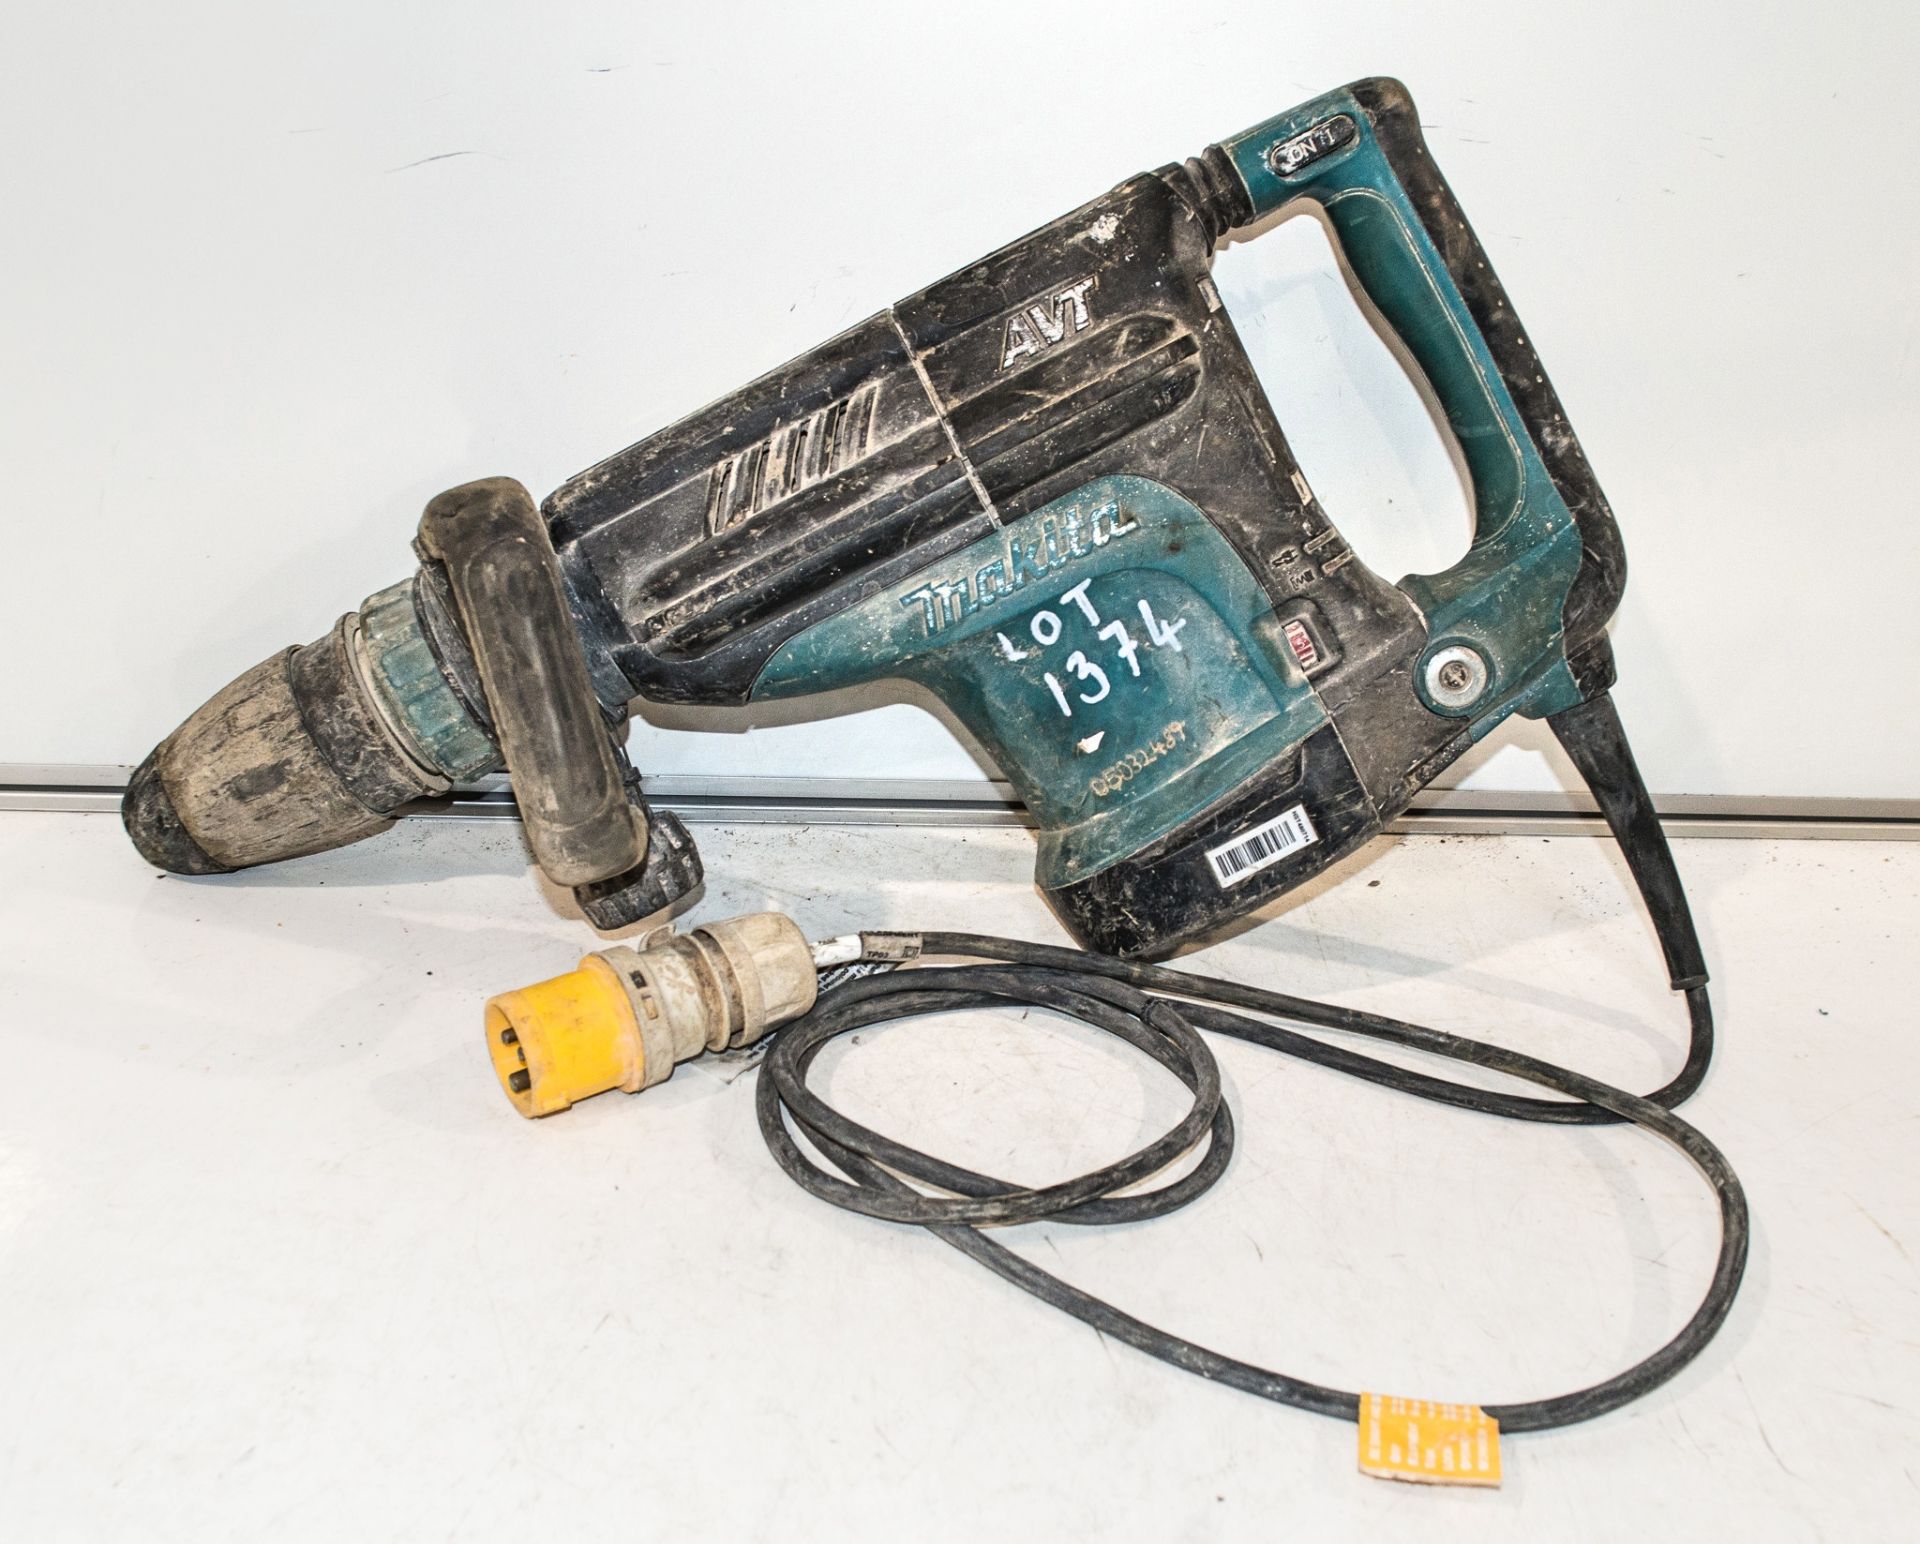 Makita HM1213C 110v SDS rotary hammer drill 05032489